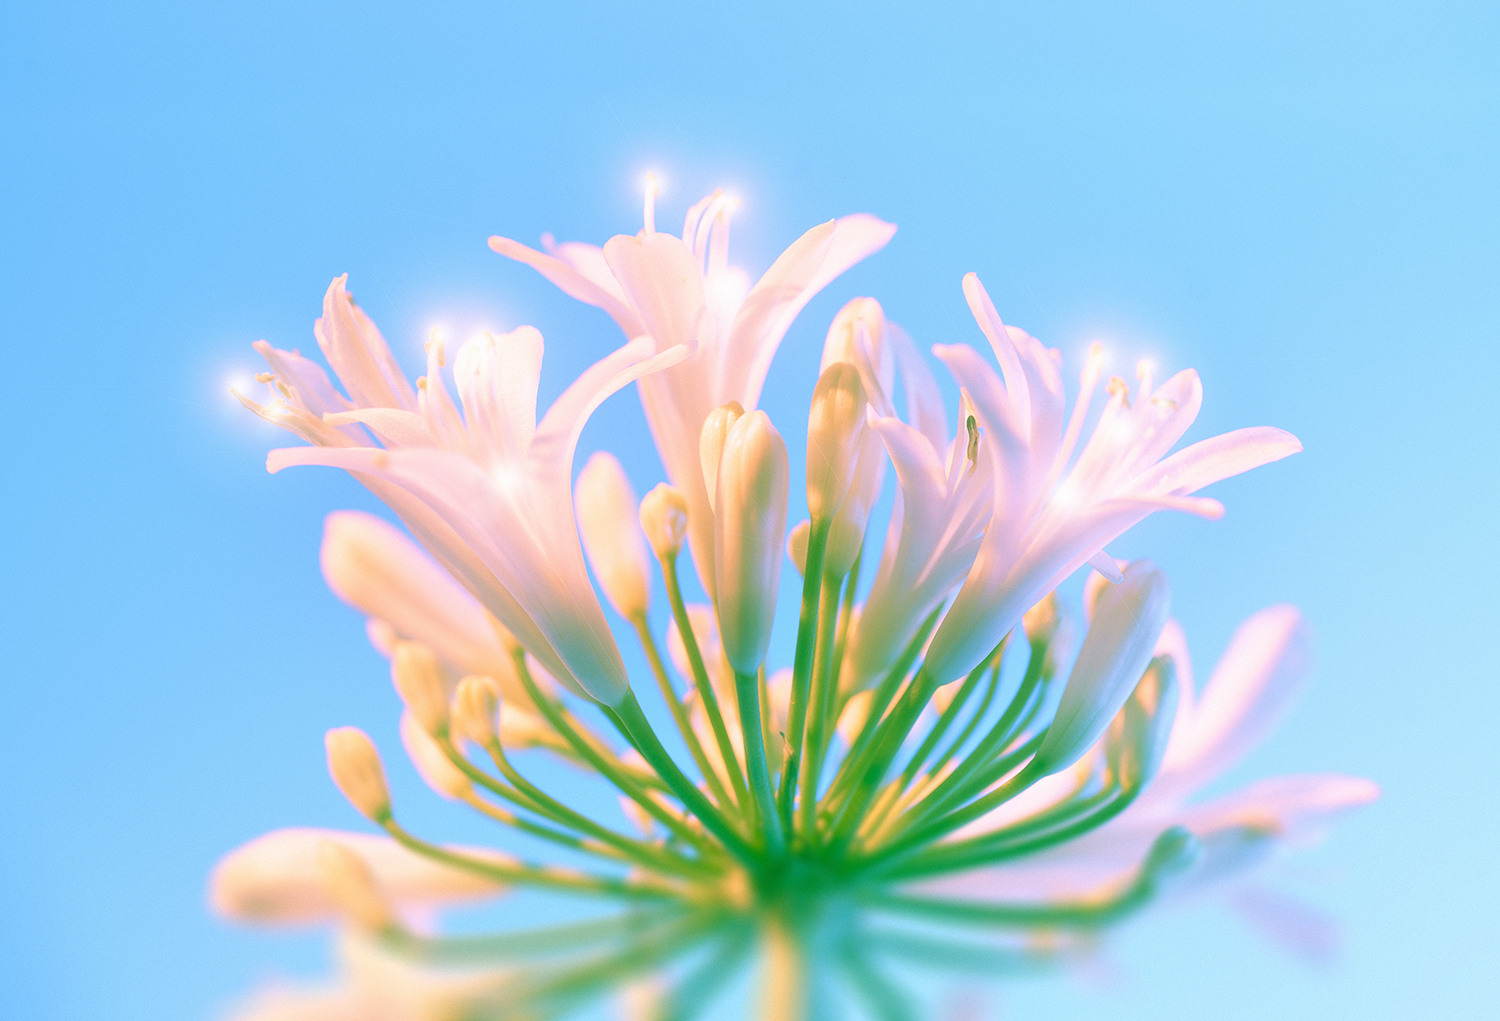 sparkle flowers 1.jpg